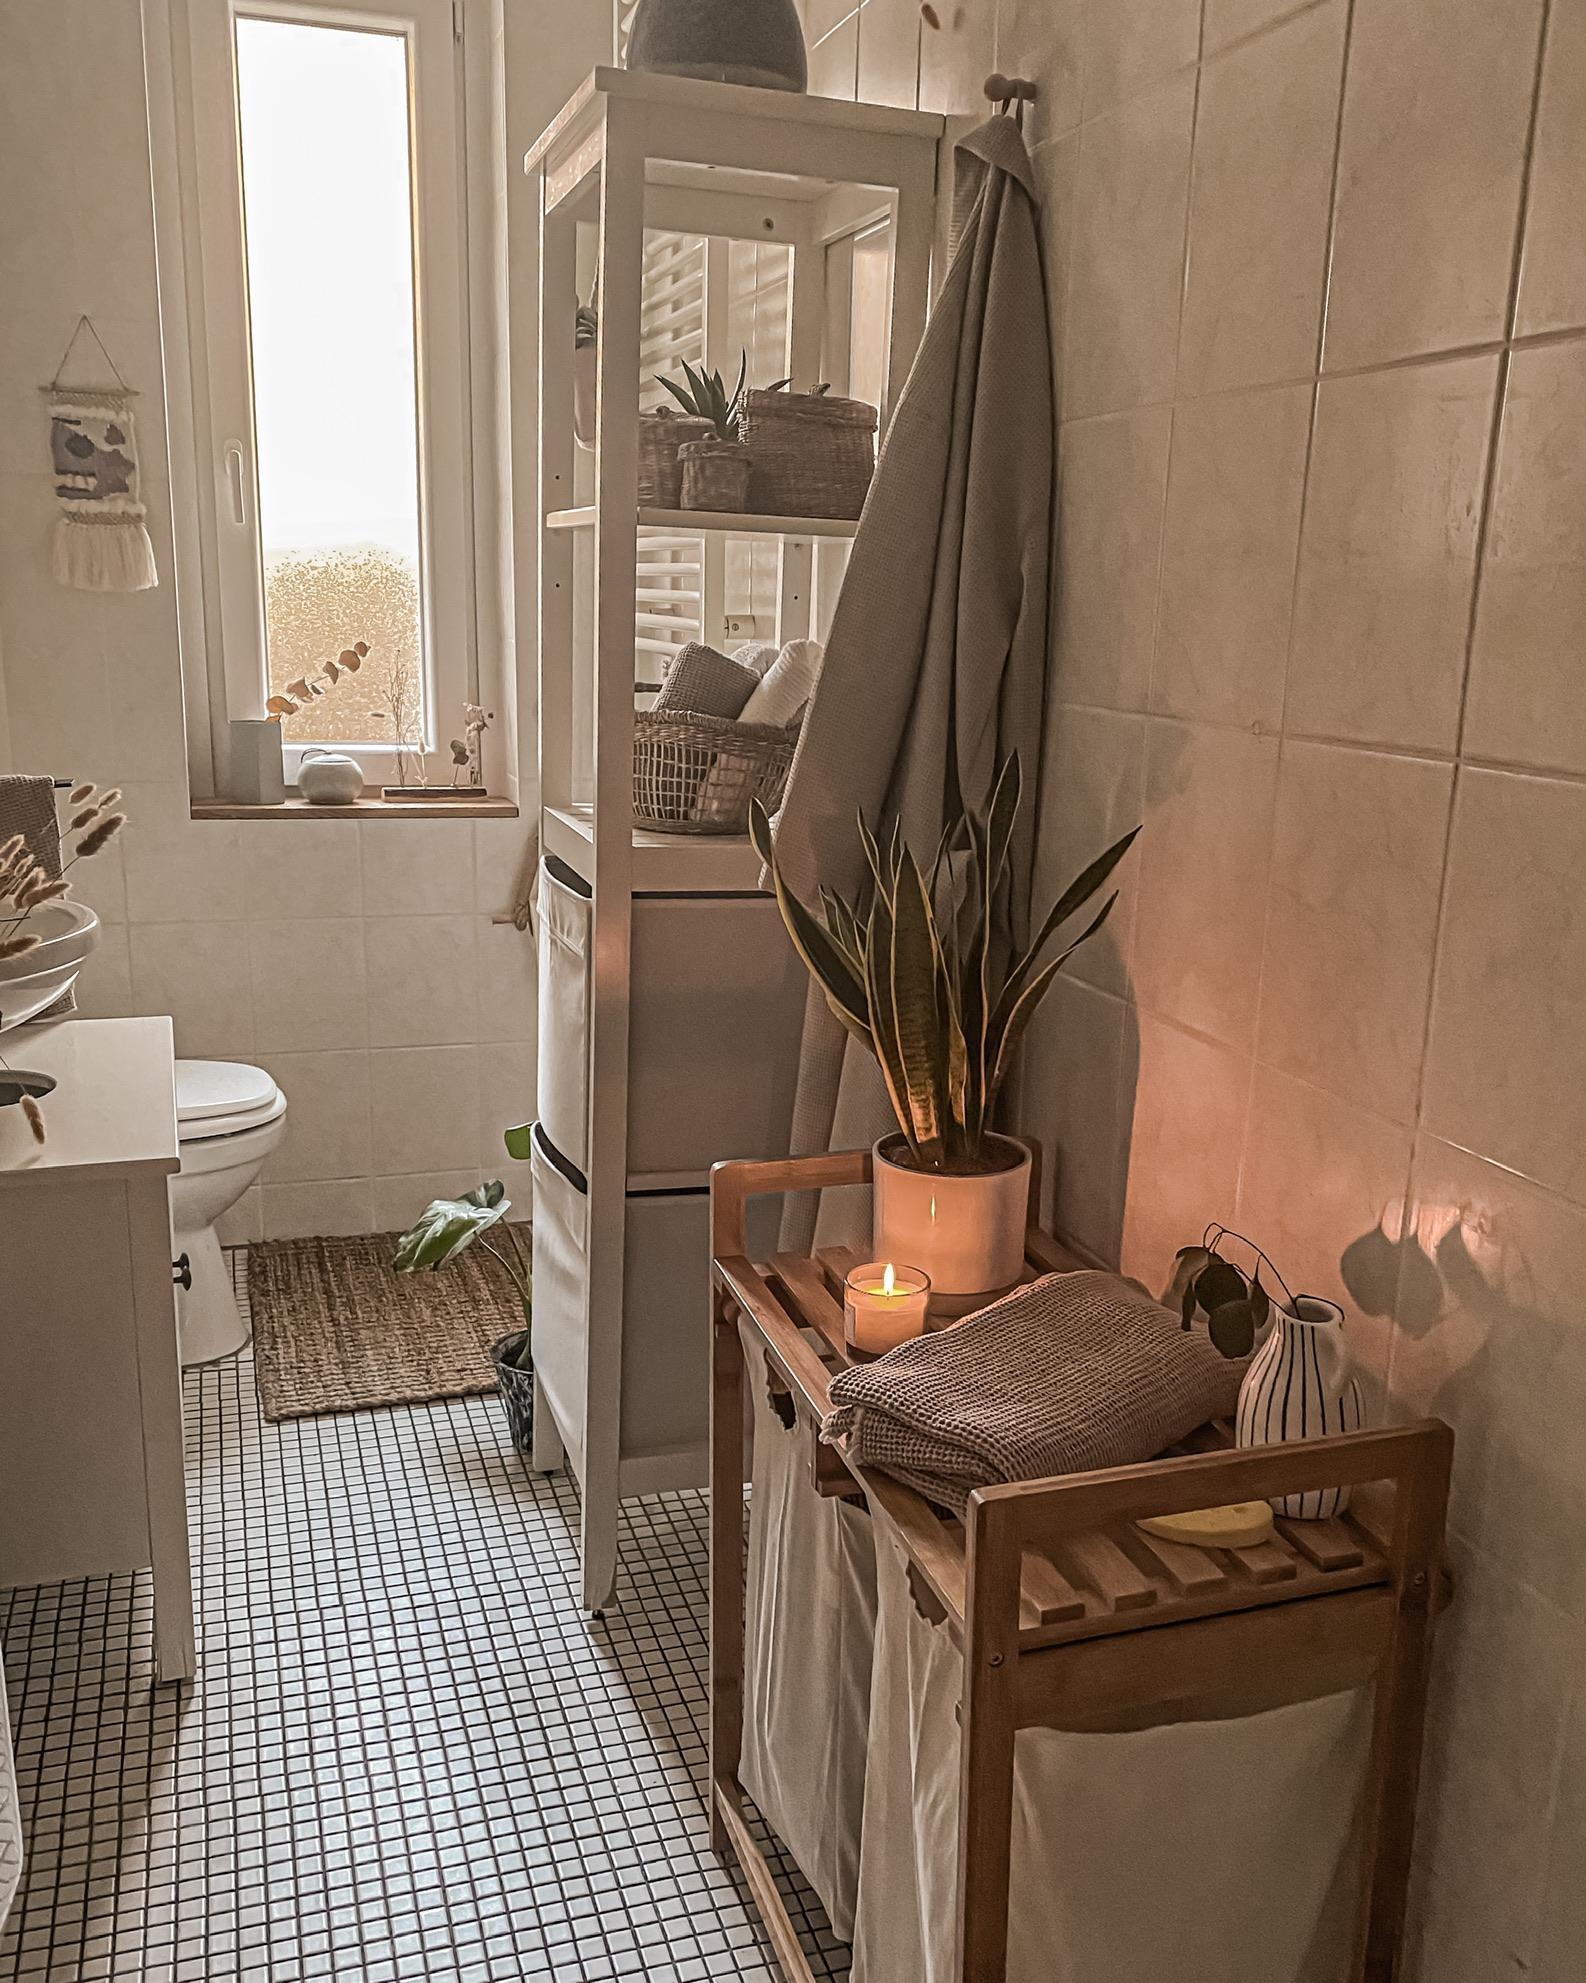 Einblick ins Badezimmer #bad #bathroom #kleinesbad #holz #korb